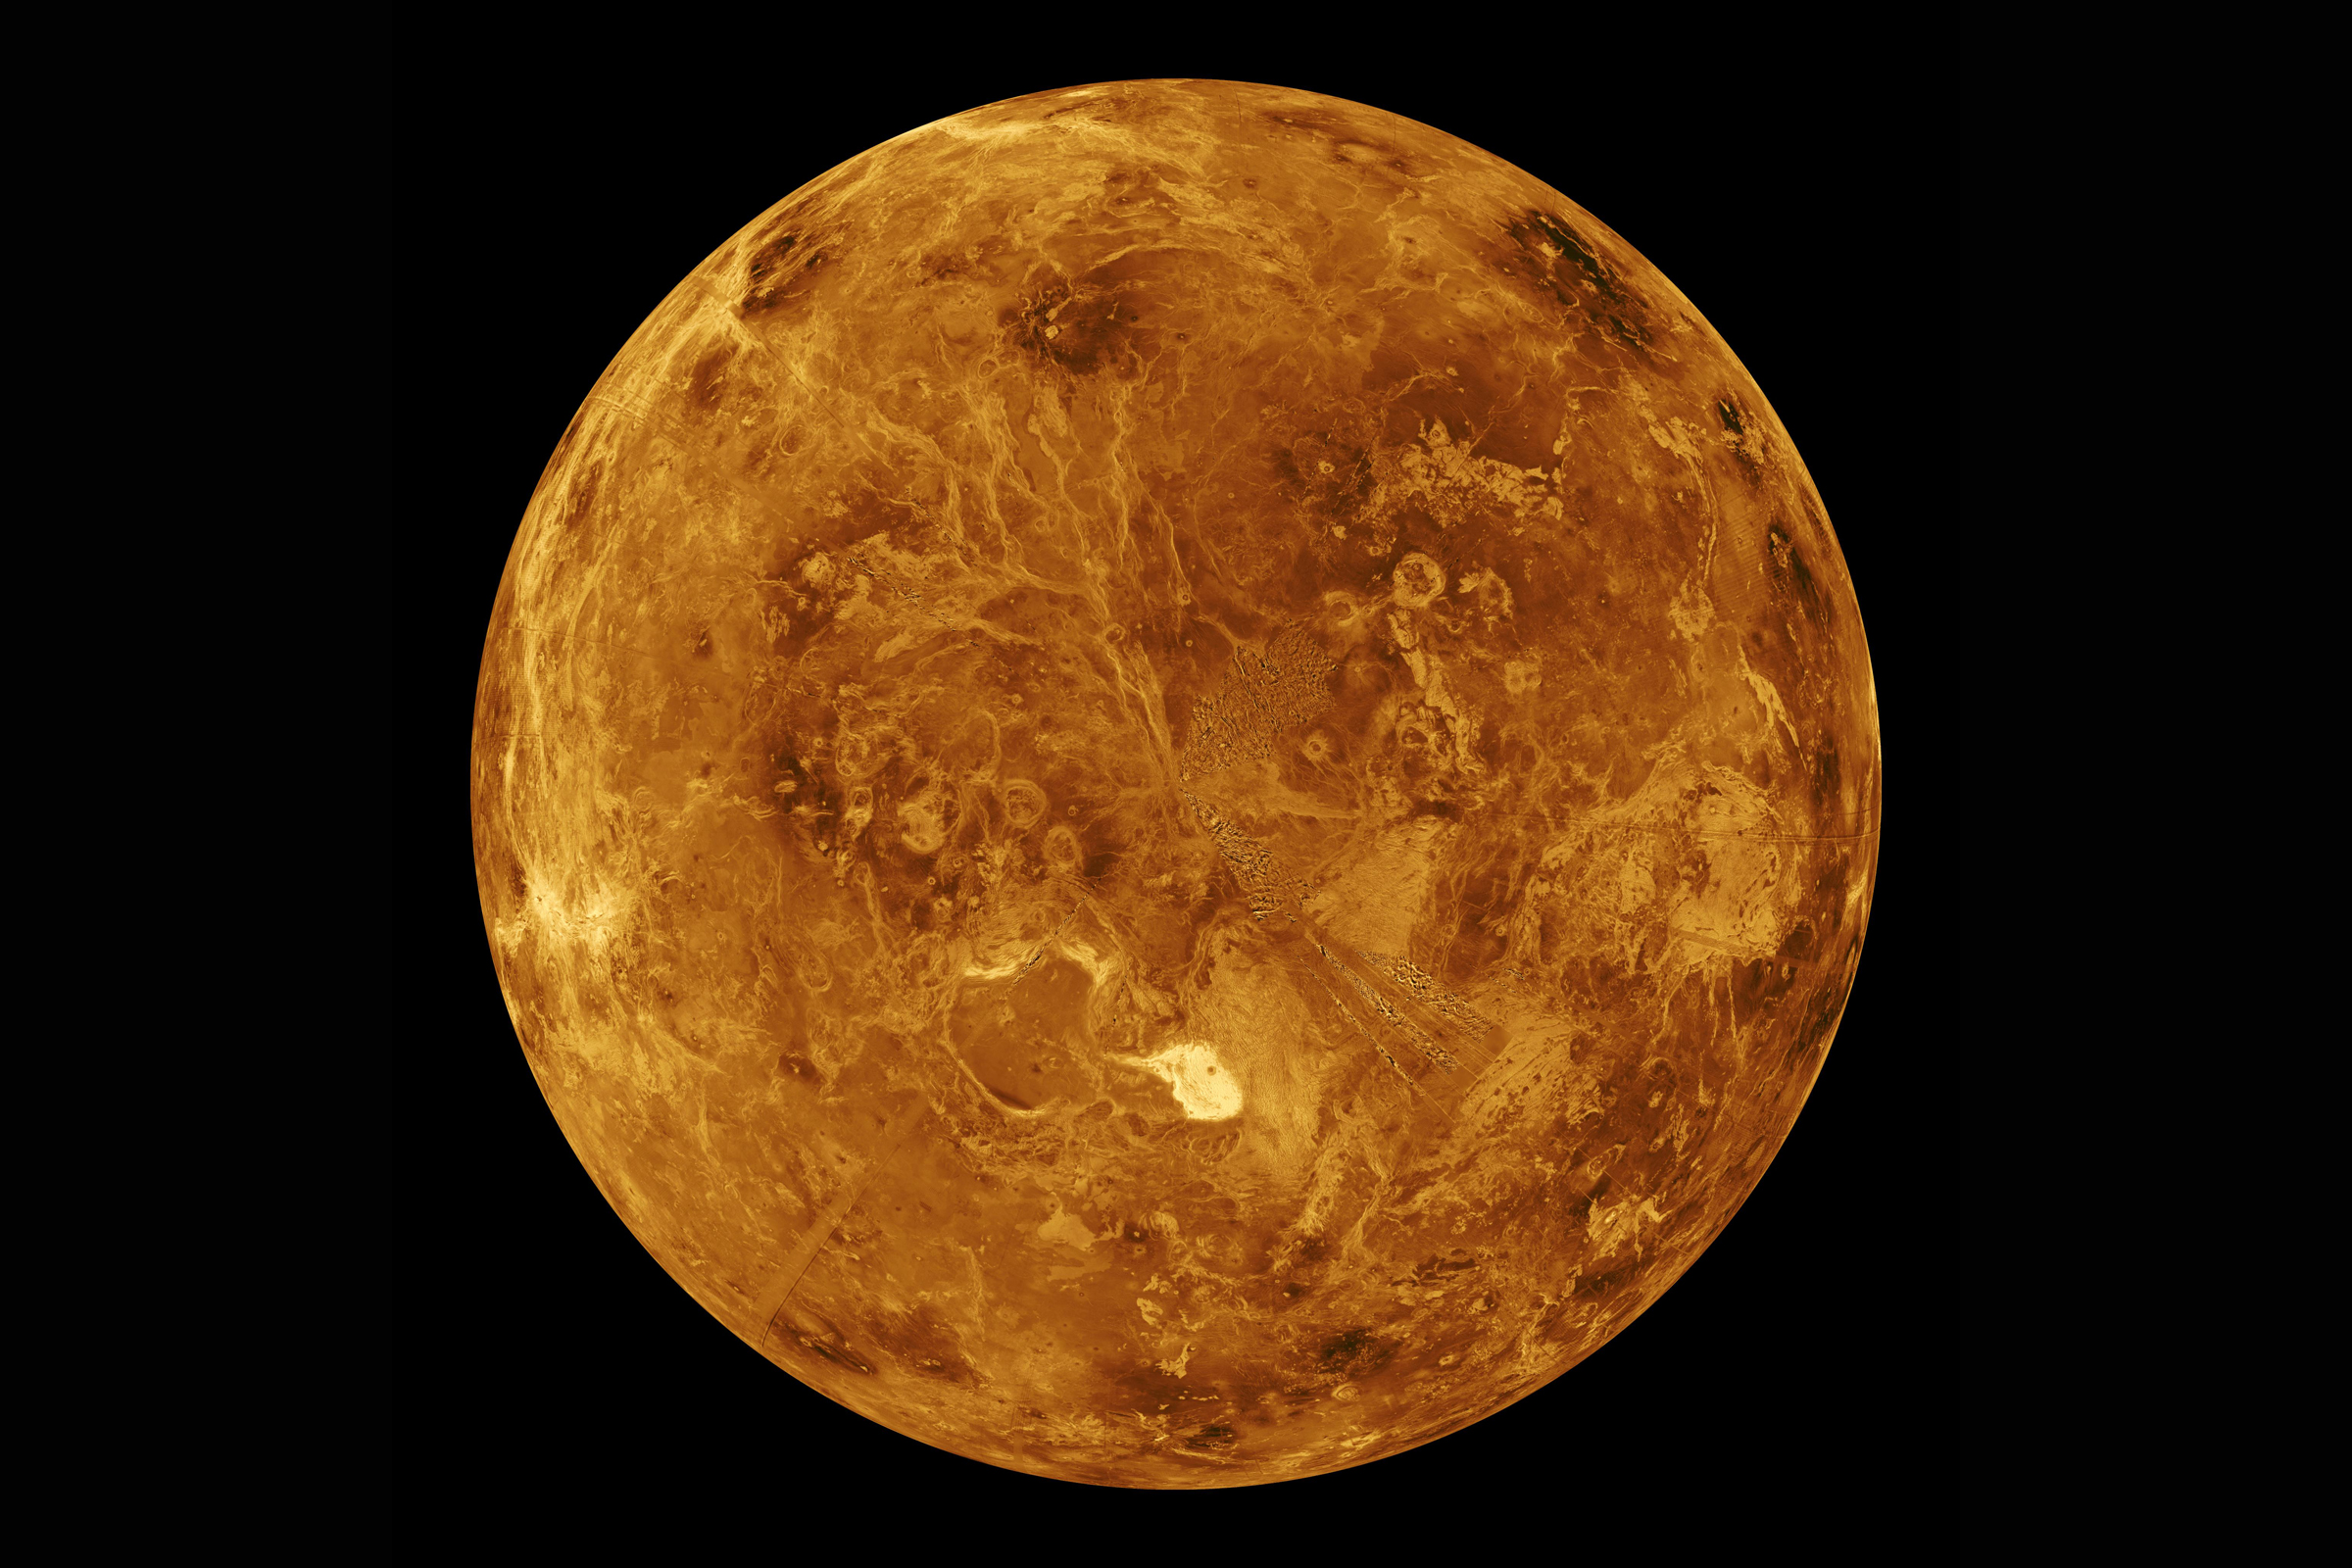 venus-surface-magellan-spacecraft.jpg